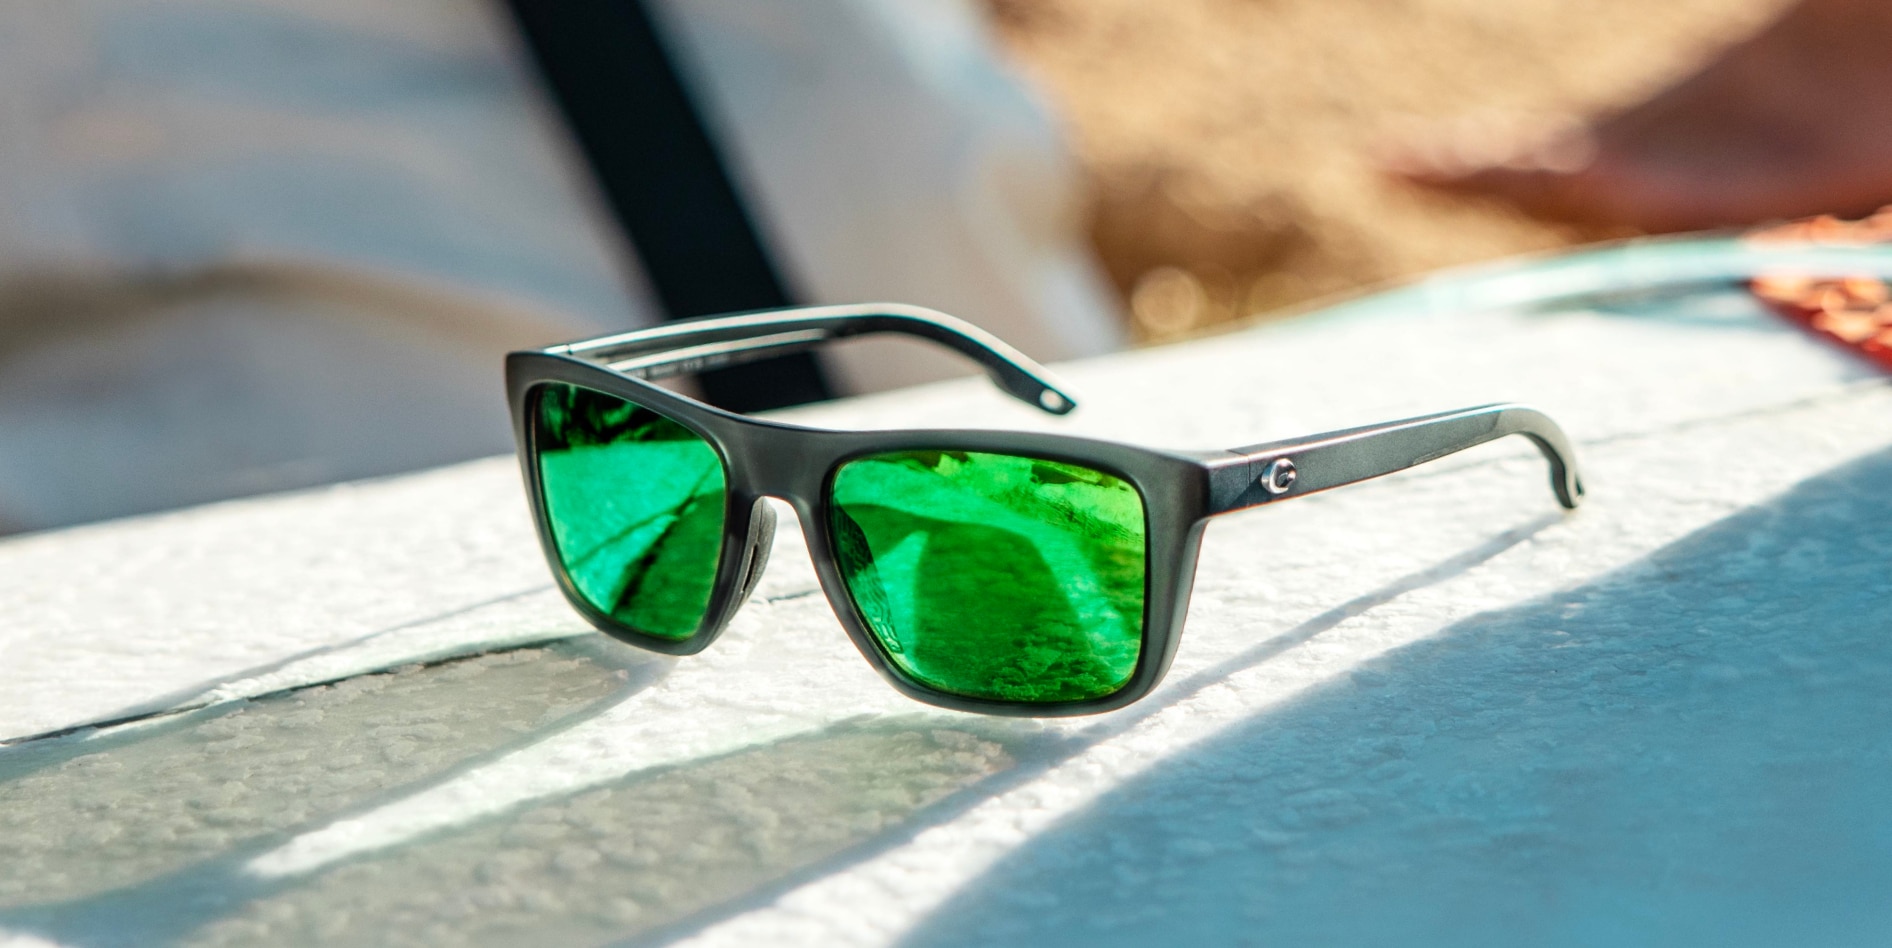 Mainsail Polarized Sunglasses in Green Mirror